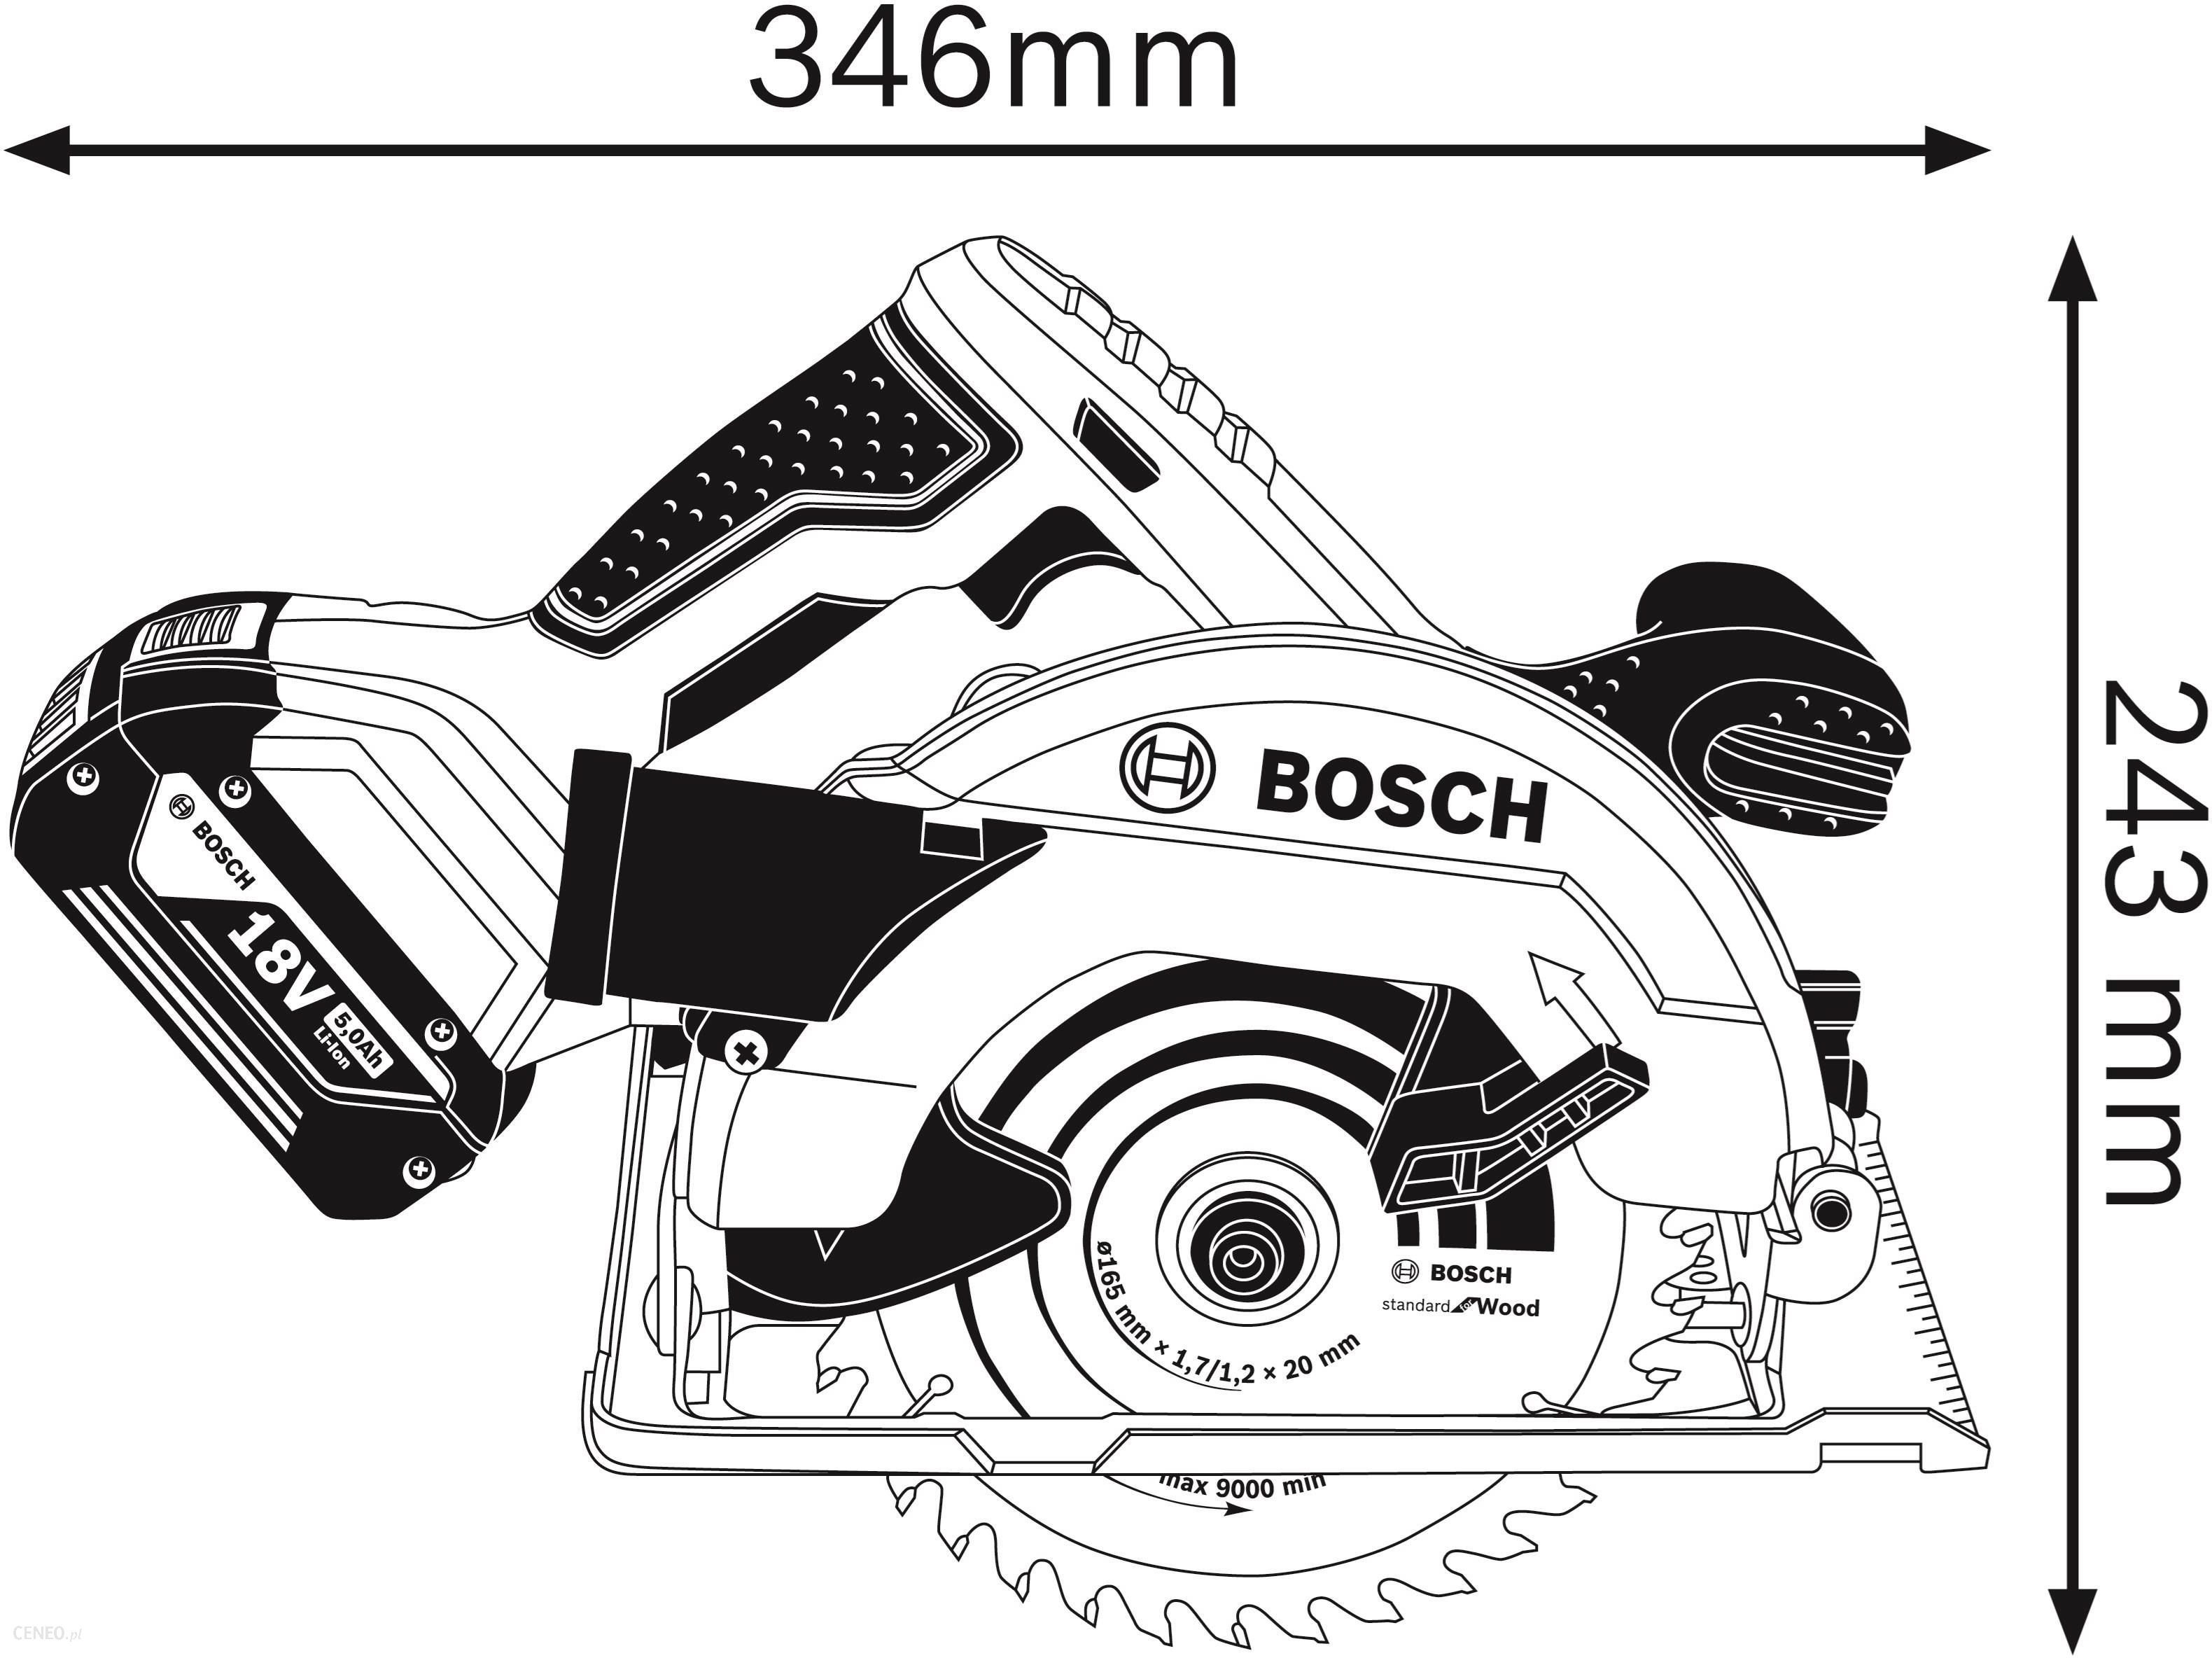 Bosch Professional Scie circulaire sans fil GKS 18V-57 G Se